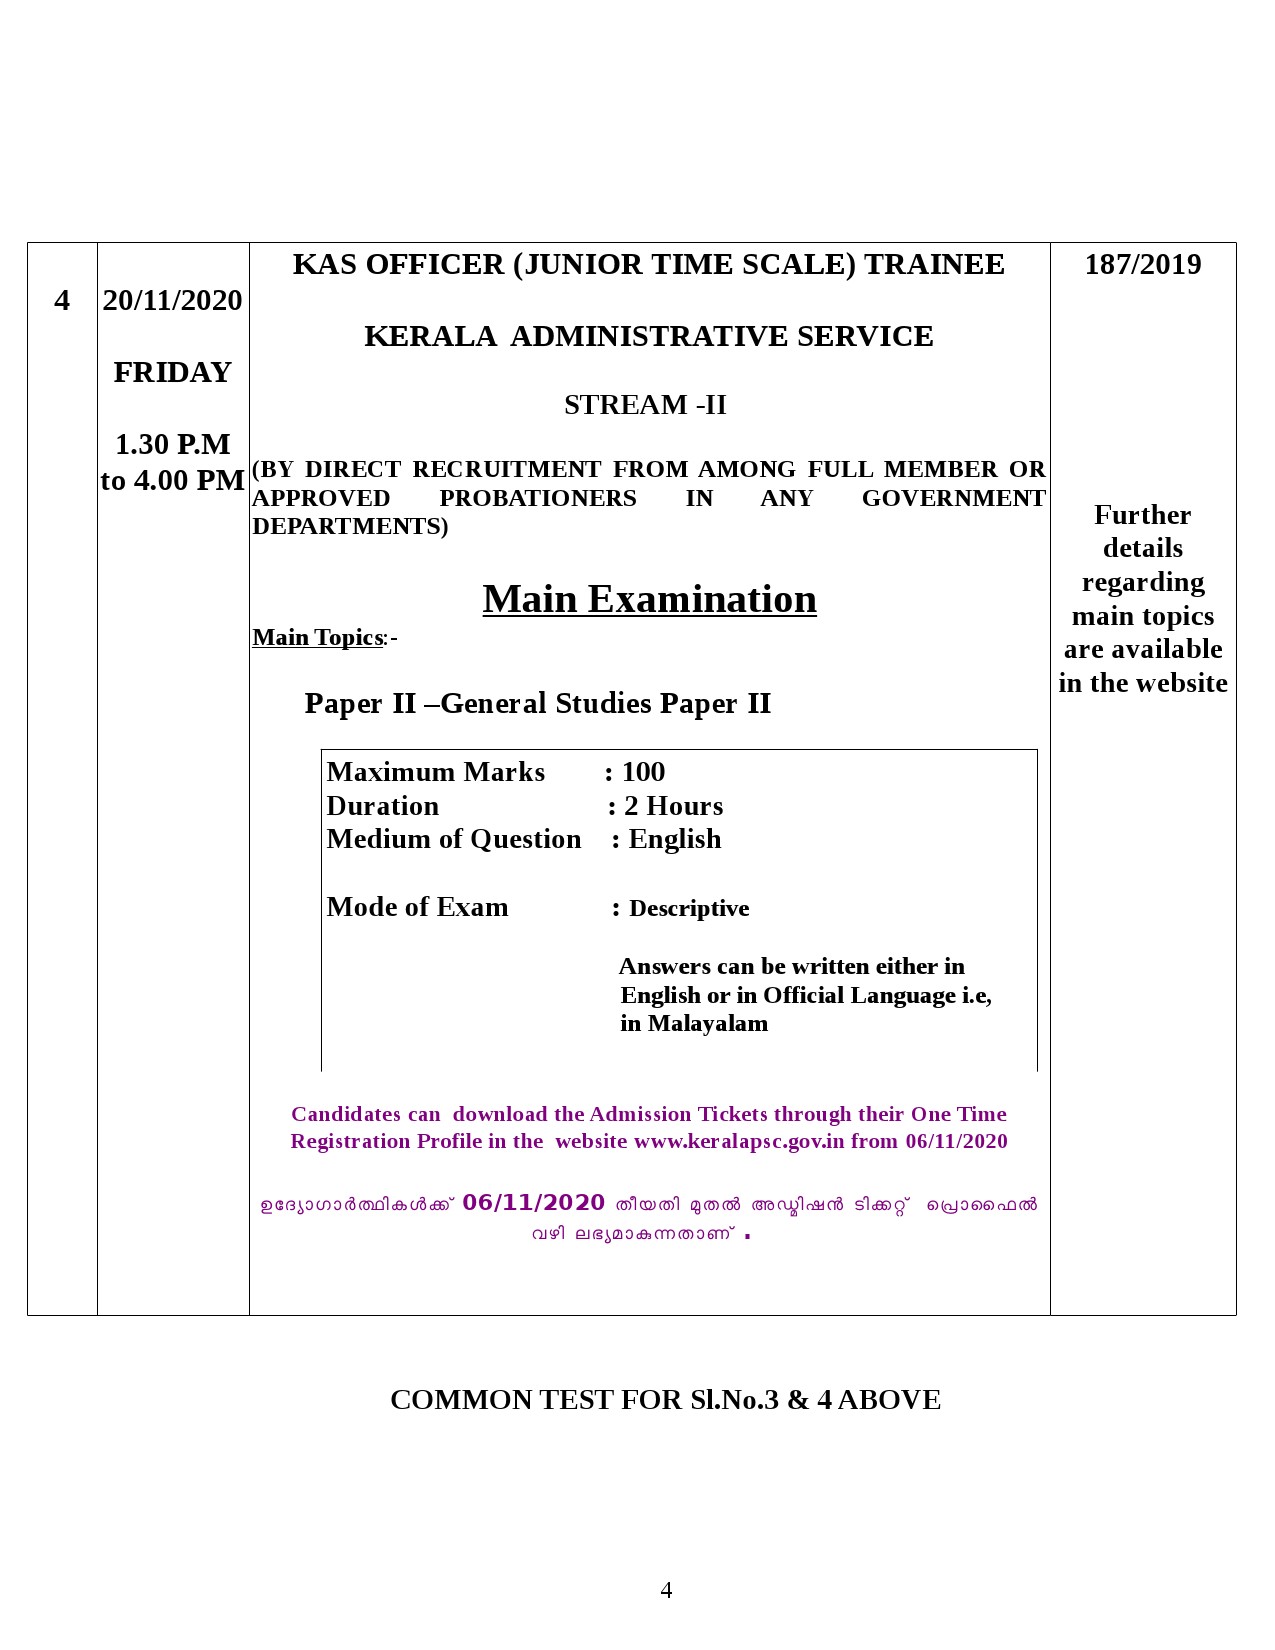 Kerala PSC Additional Exam for November 2020 - Notification Image 4